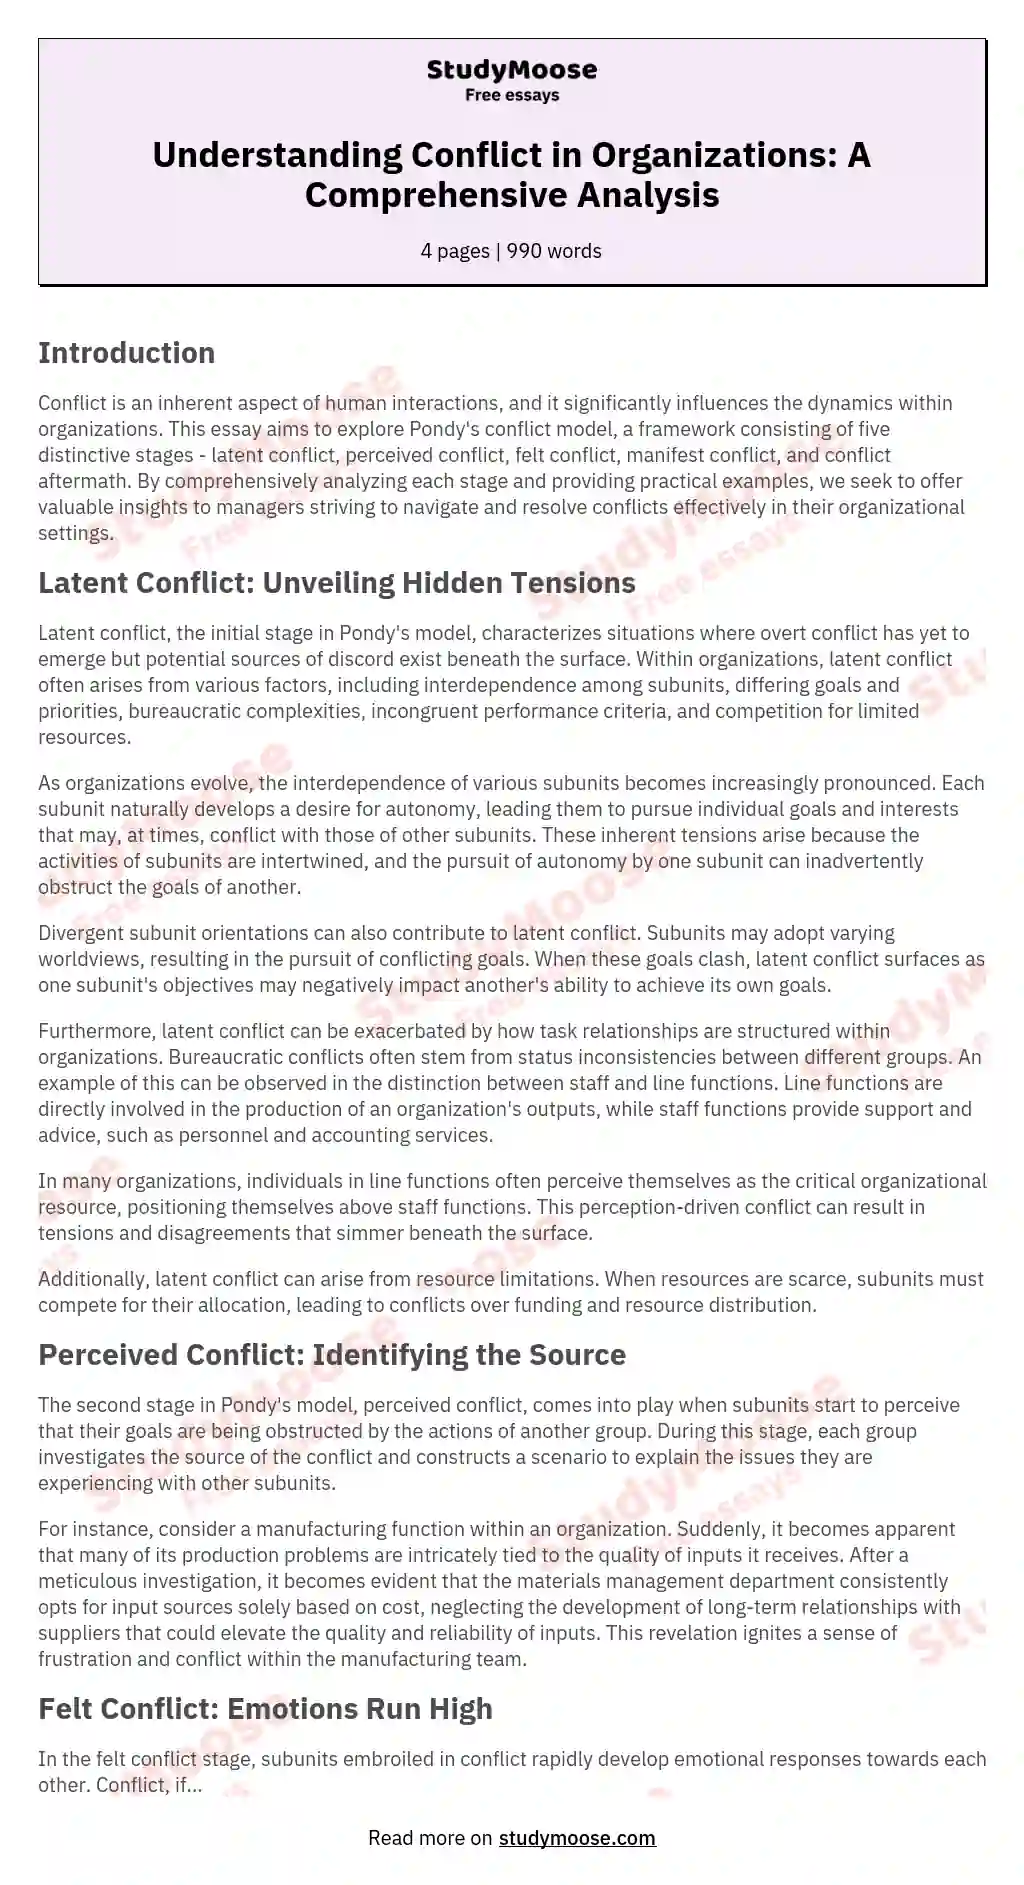 Understanding Conflict in Organizations: A Comprehensive Analysis essay